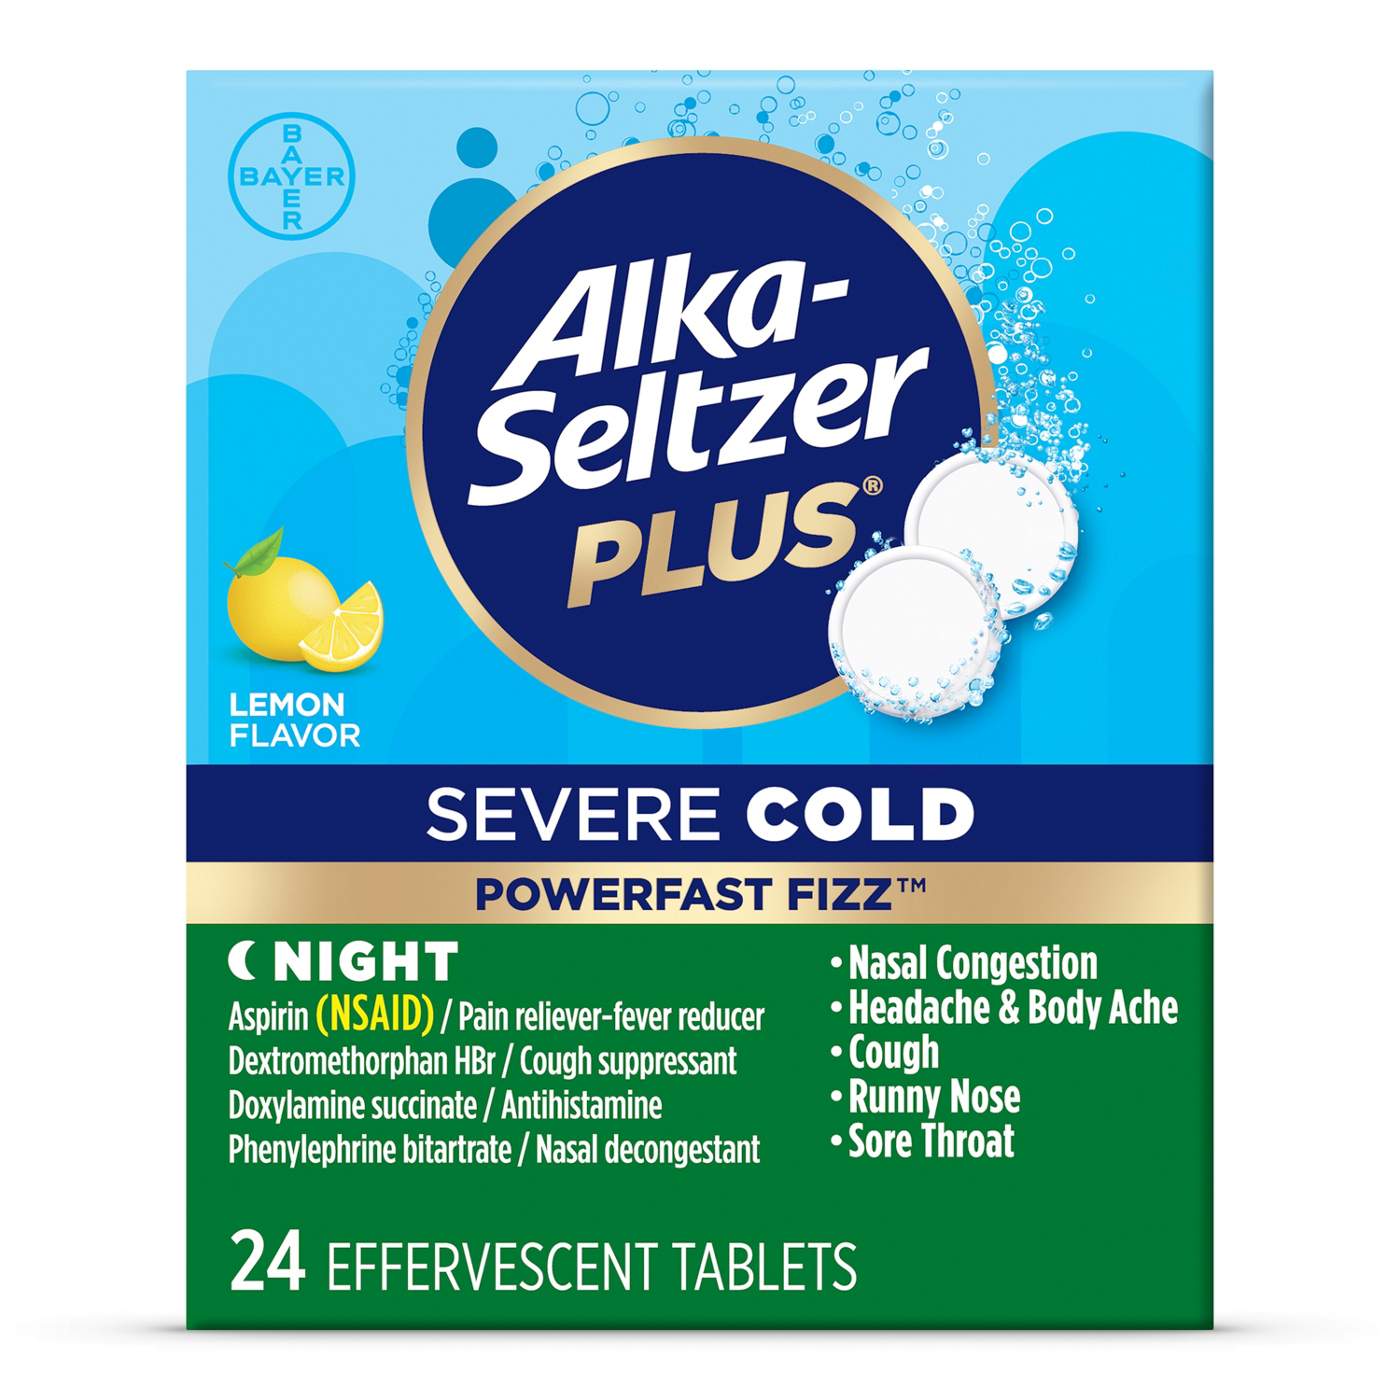 Alka-Seltzer Plus Severe Cold Powerfast Fizz Night Tablets - Lemon; image 1 of 8